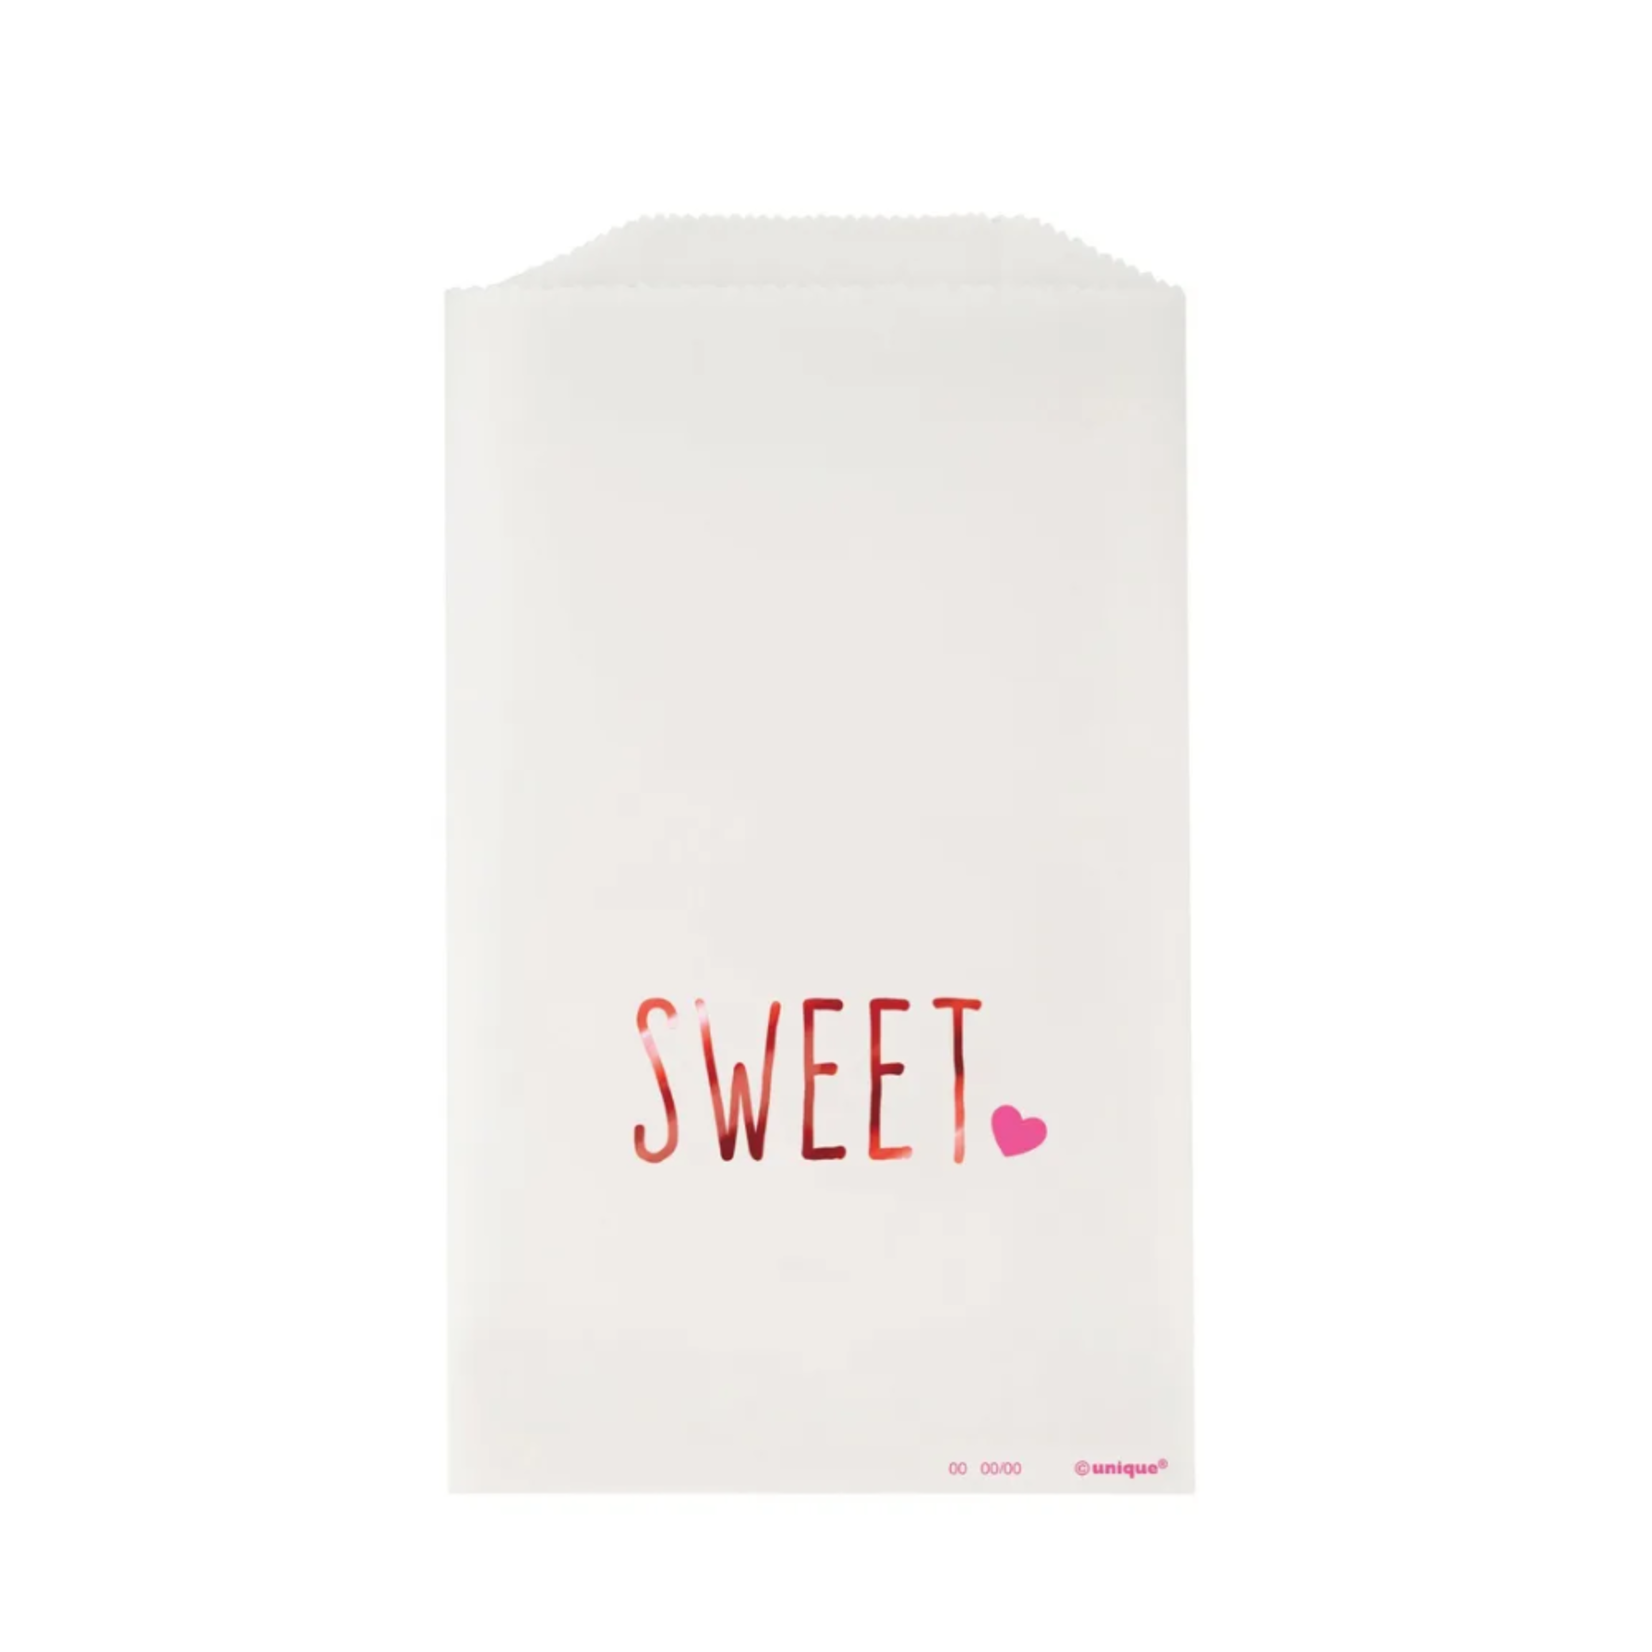 Glassine "Sweet" Treat Bags 8ct